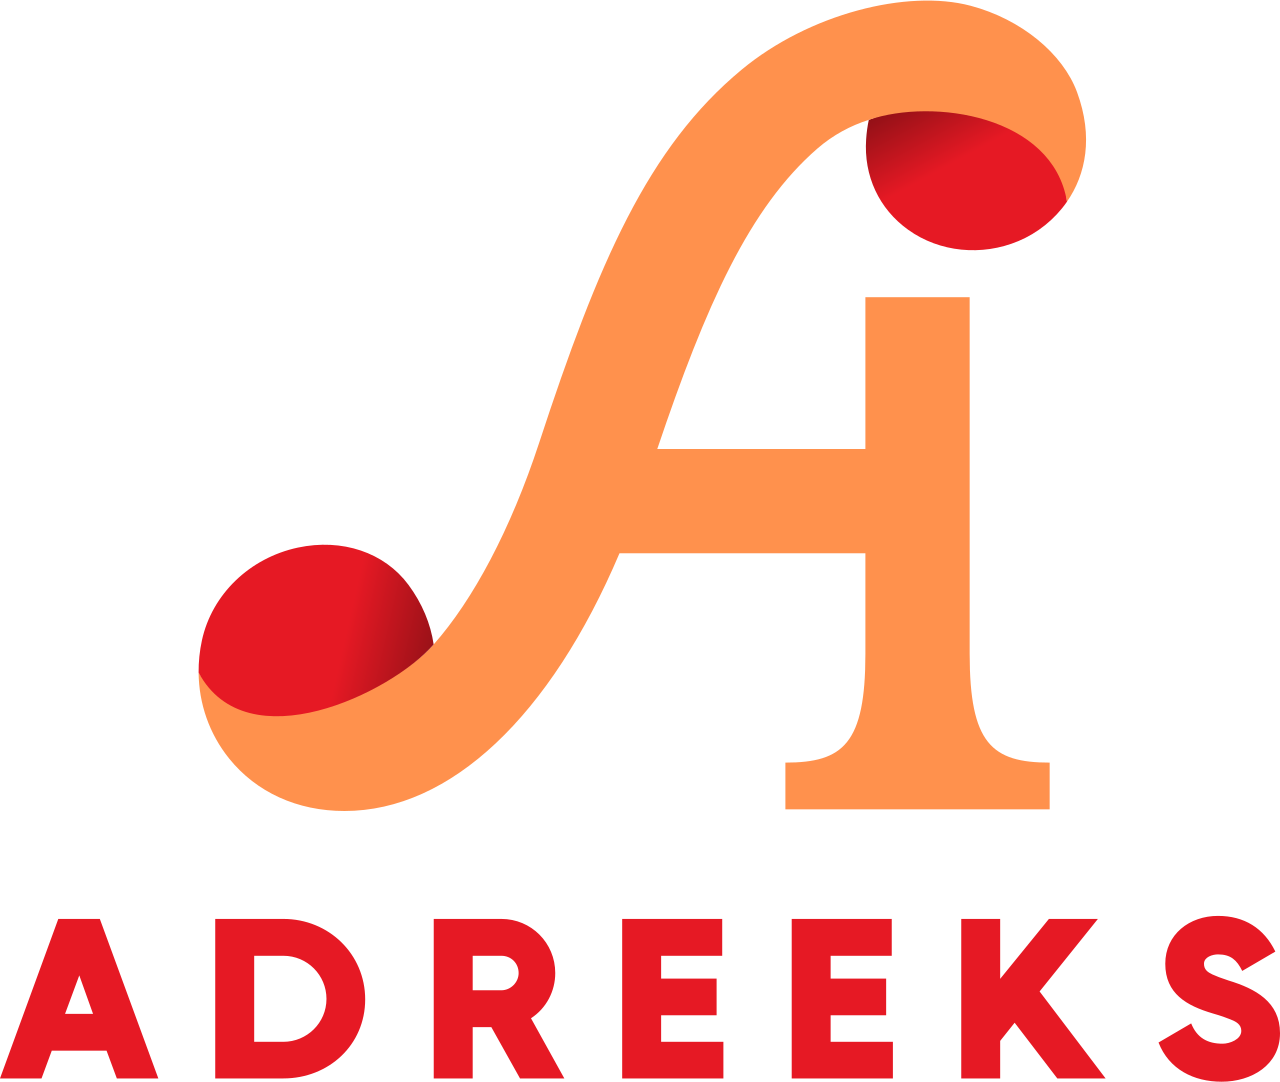 ADREEKS's logo